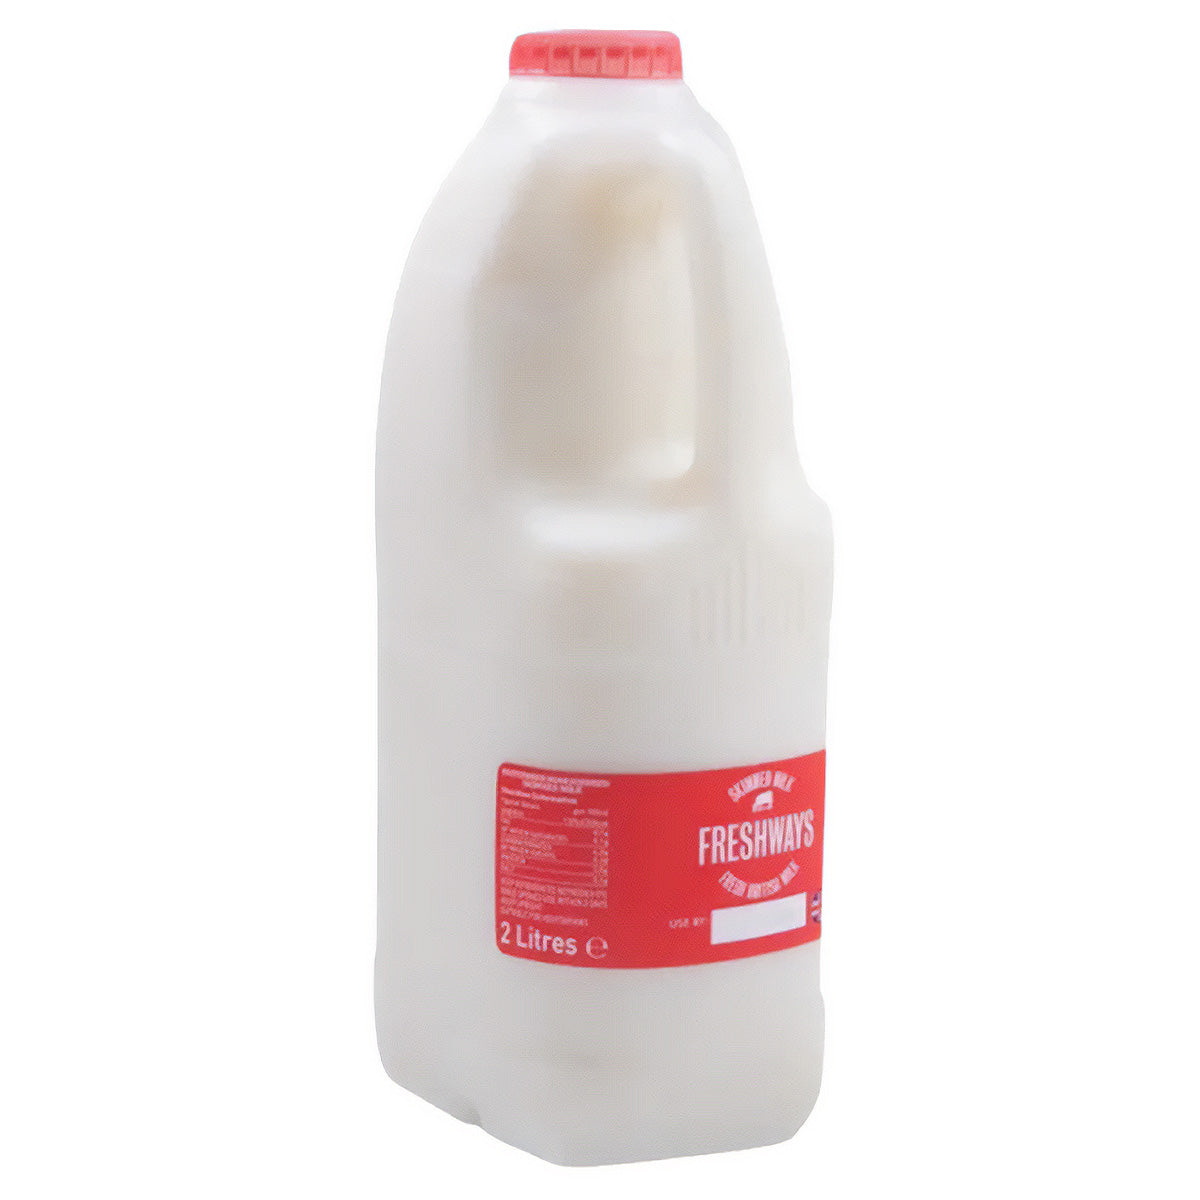 Freshways - Skimmed Milk - 2L - Continental Food Store